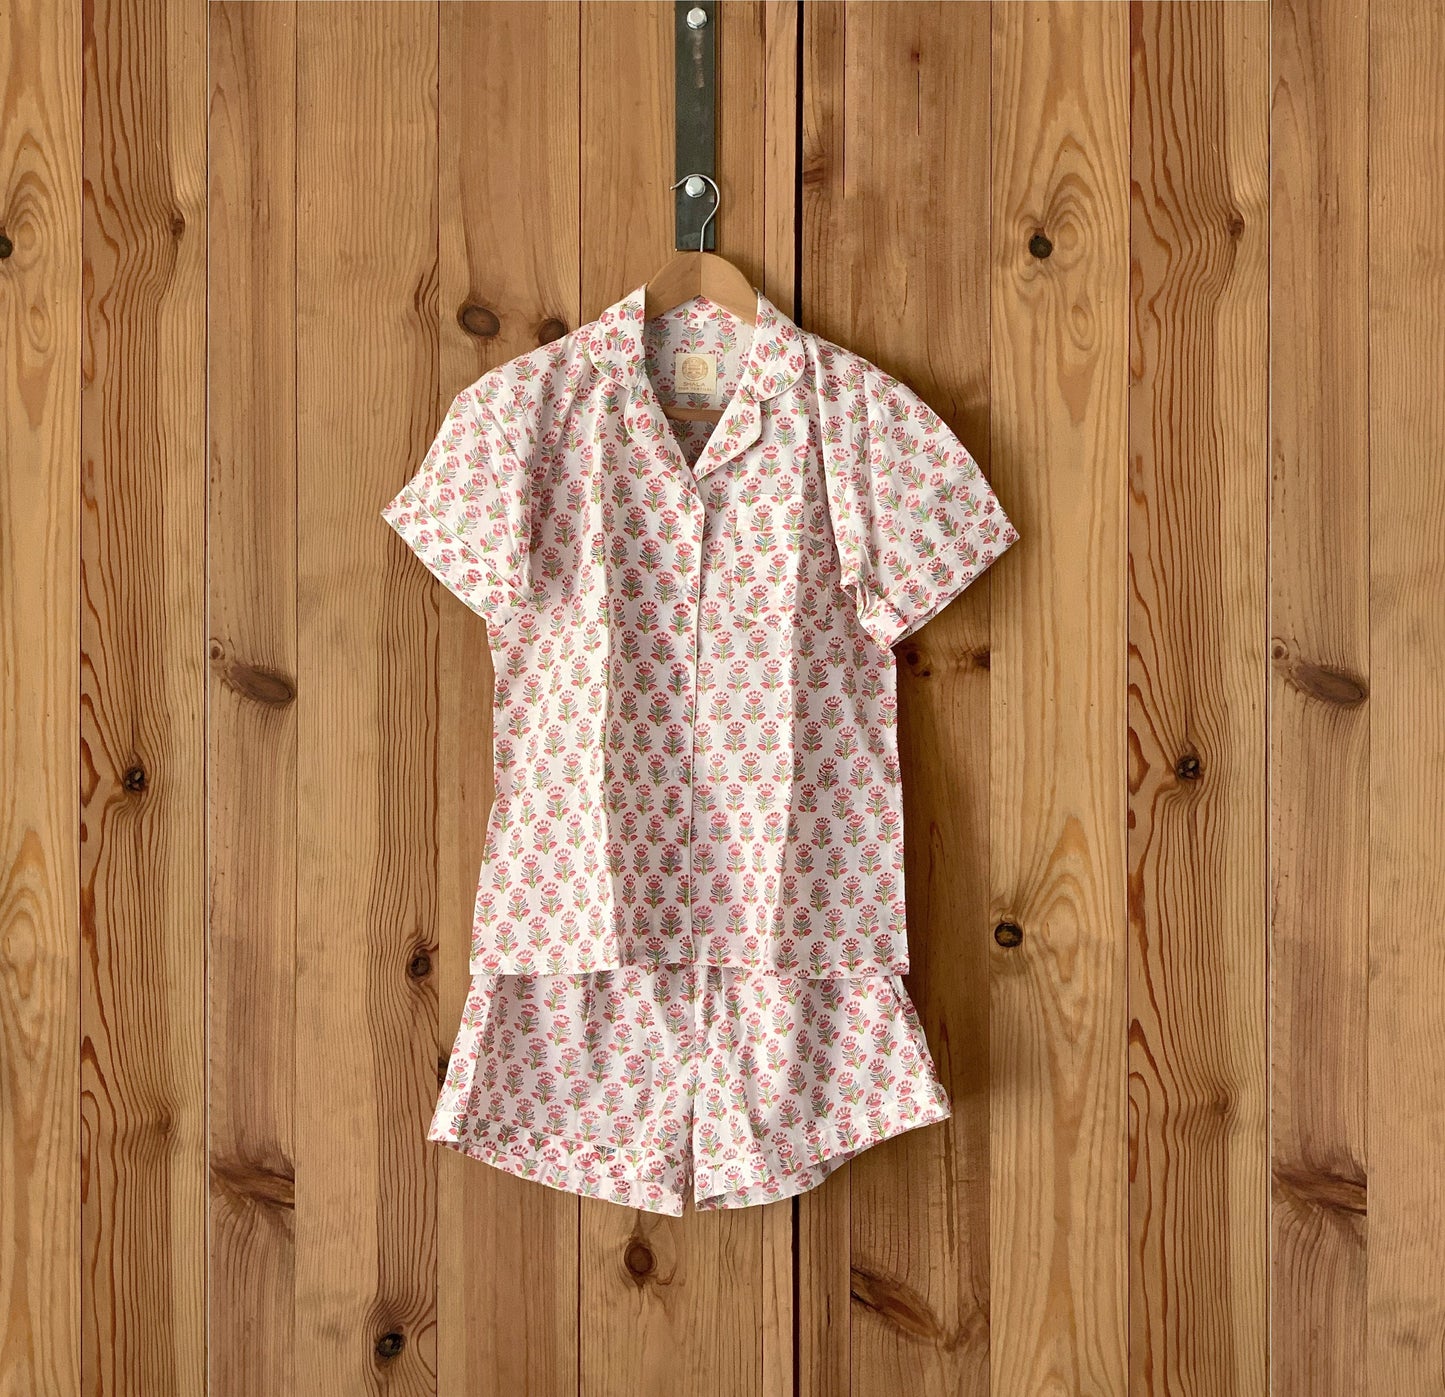 Short-sleeved pajamas · Pure cotton block print artisanal in India · 100% cotton summer pajamas · White pink flowers